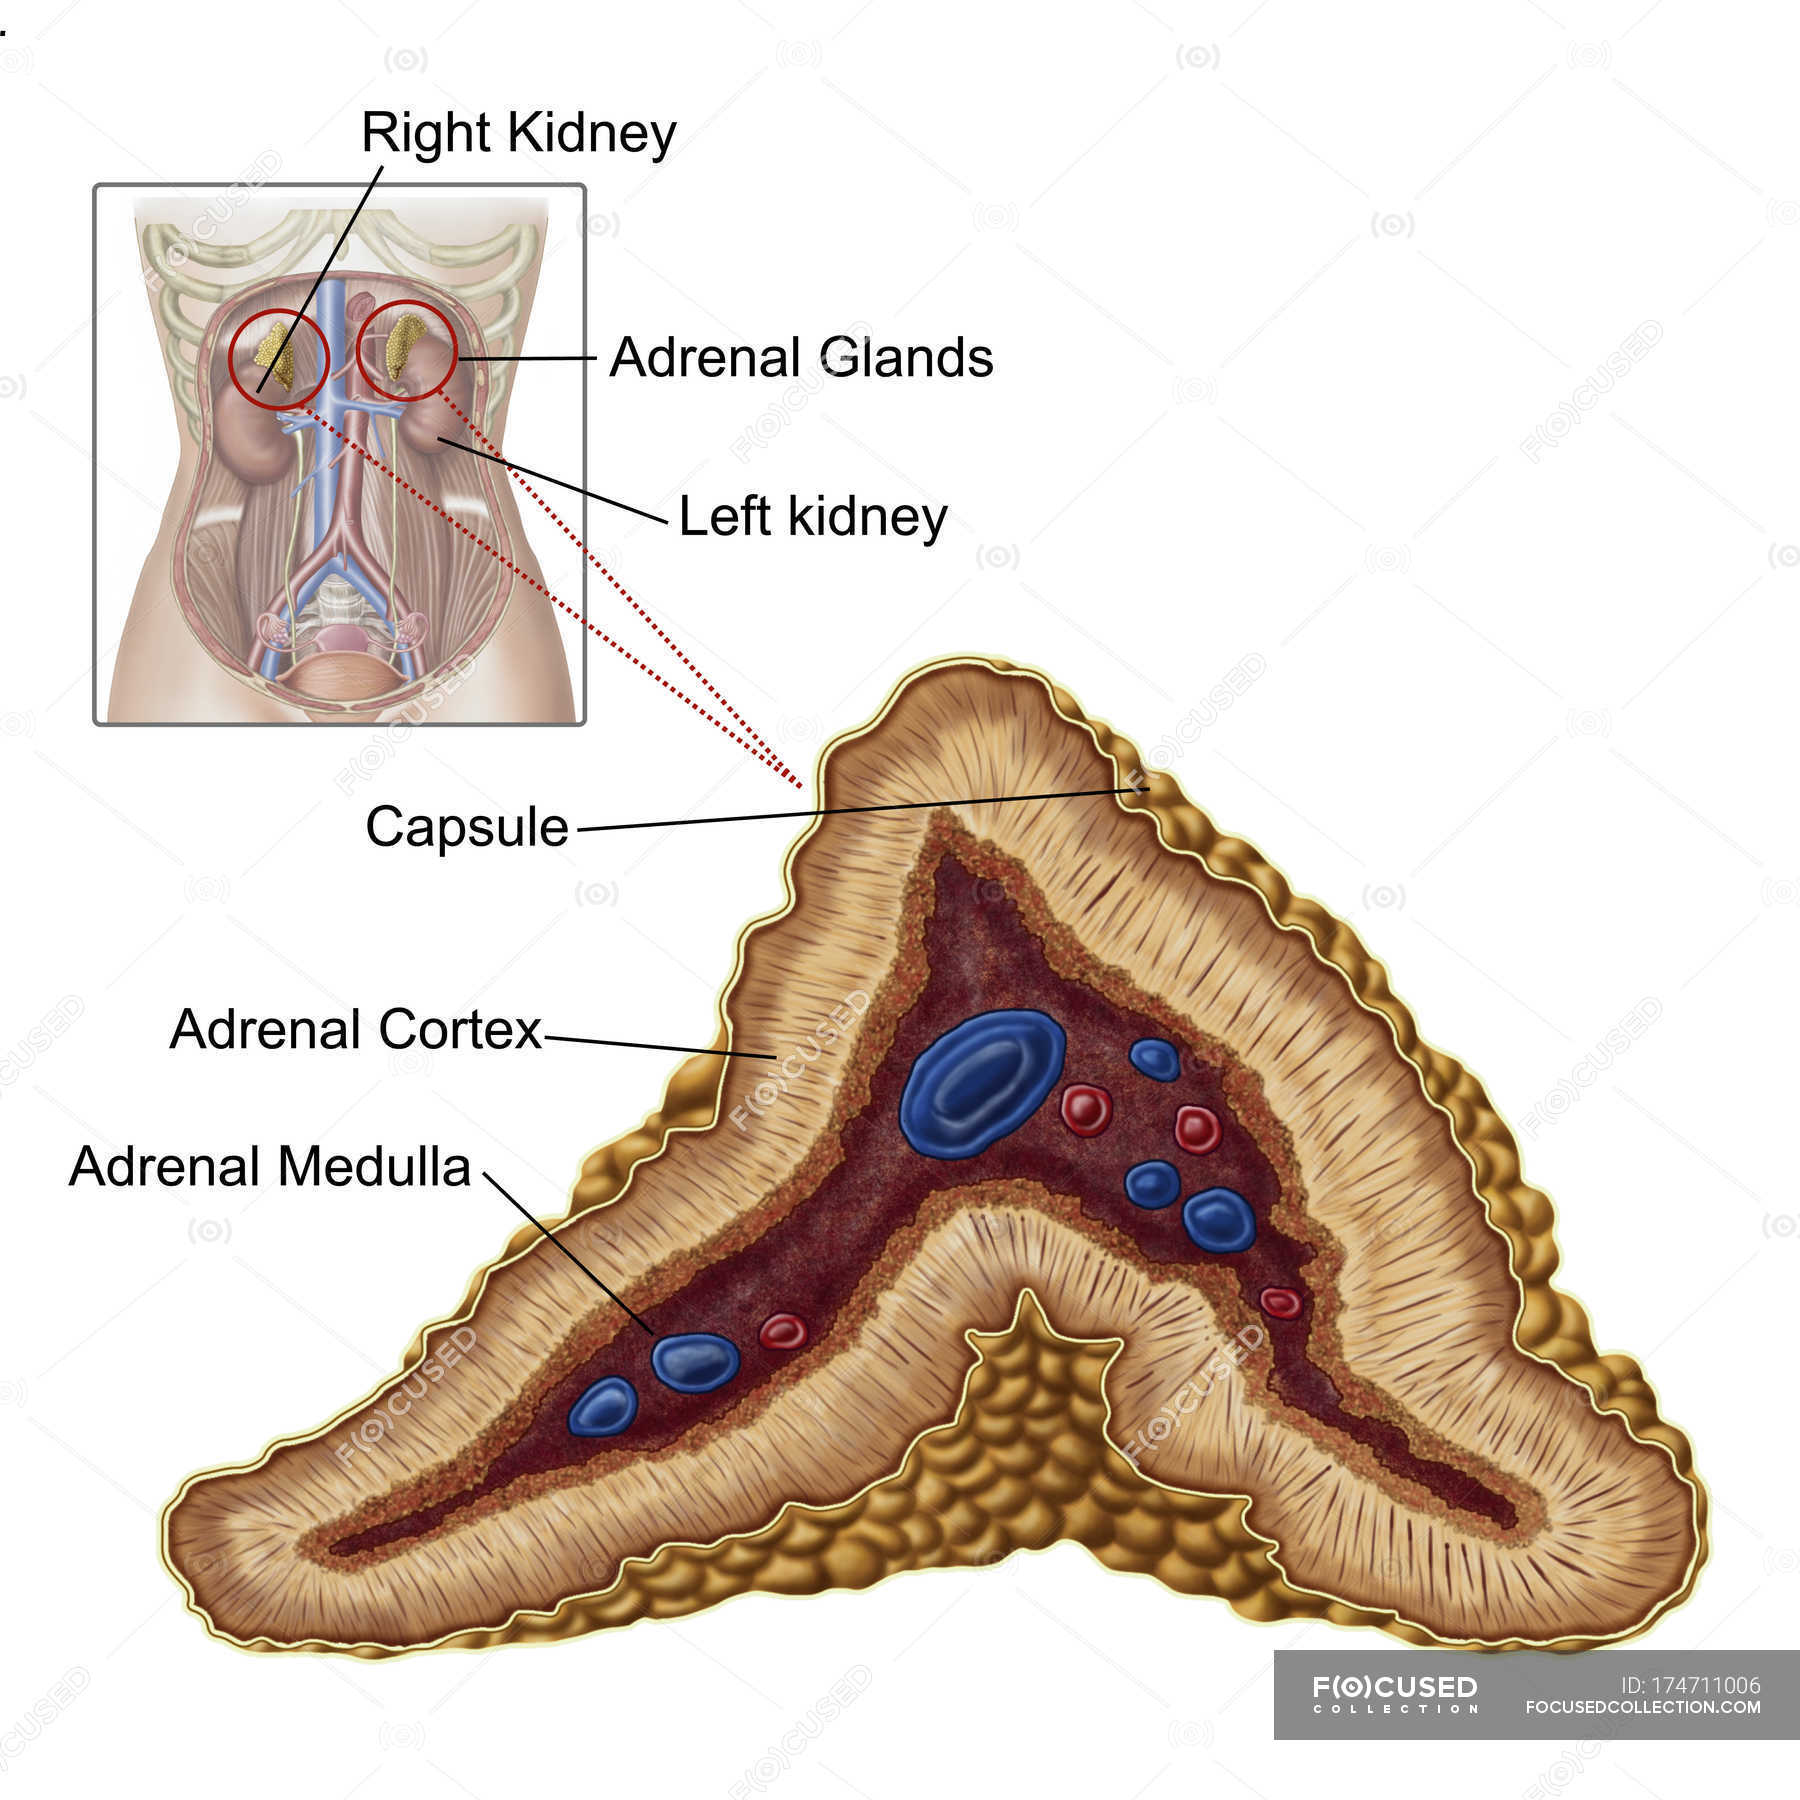 adrenal gland cortex